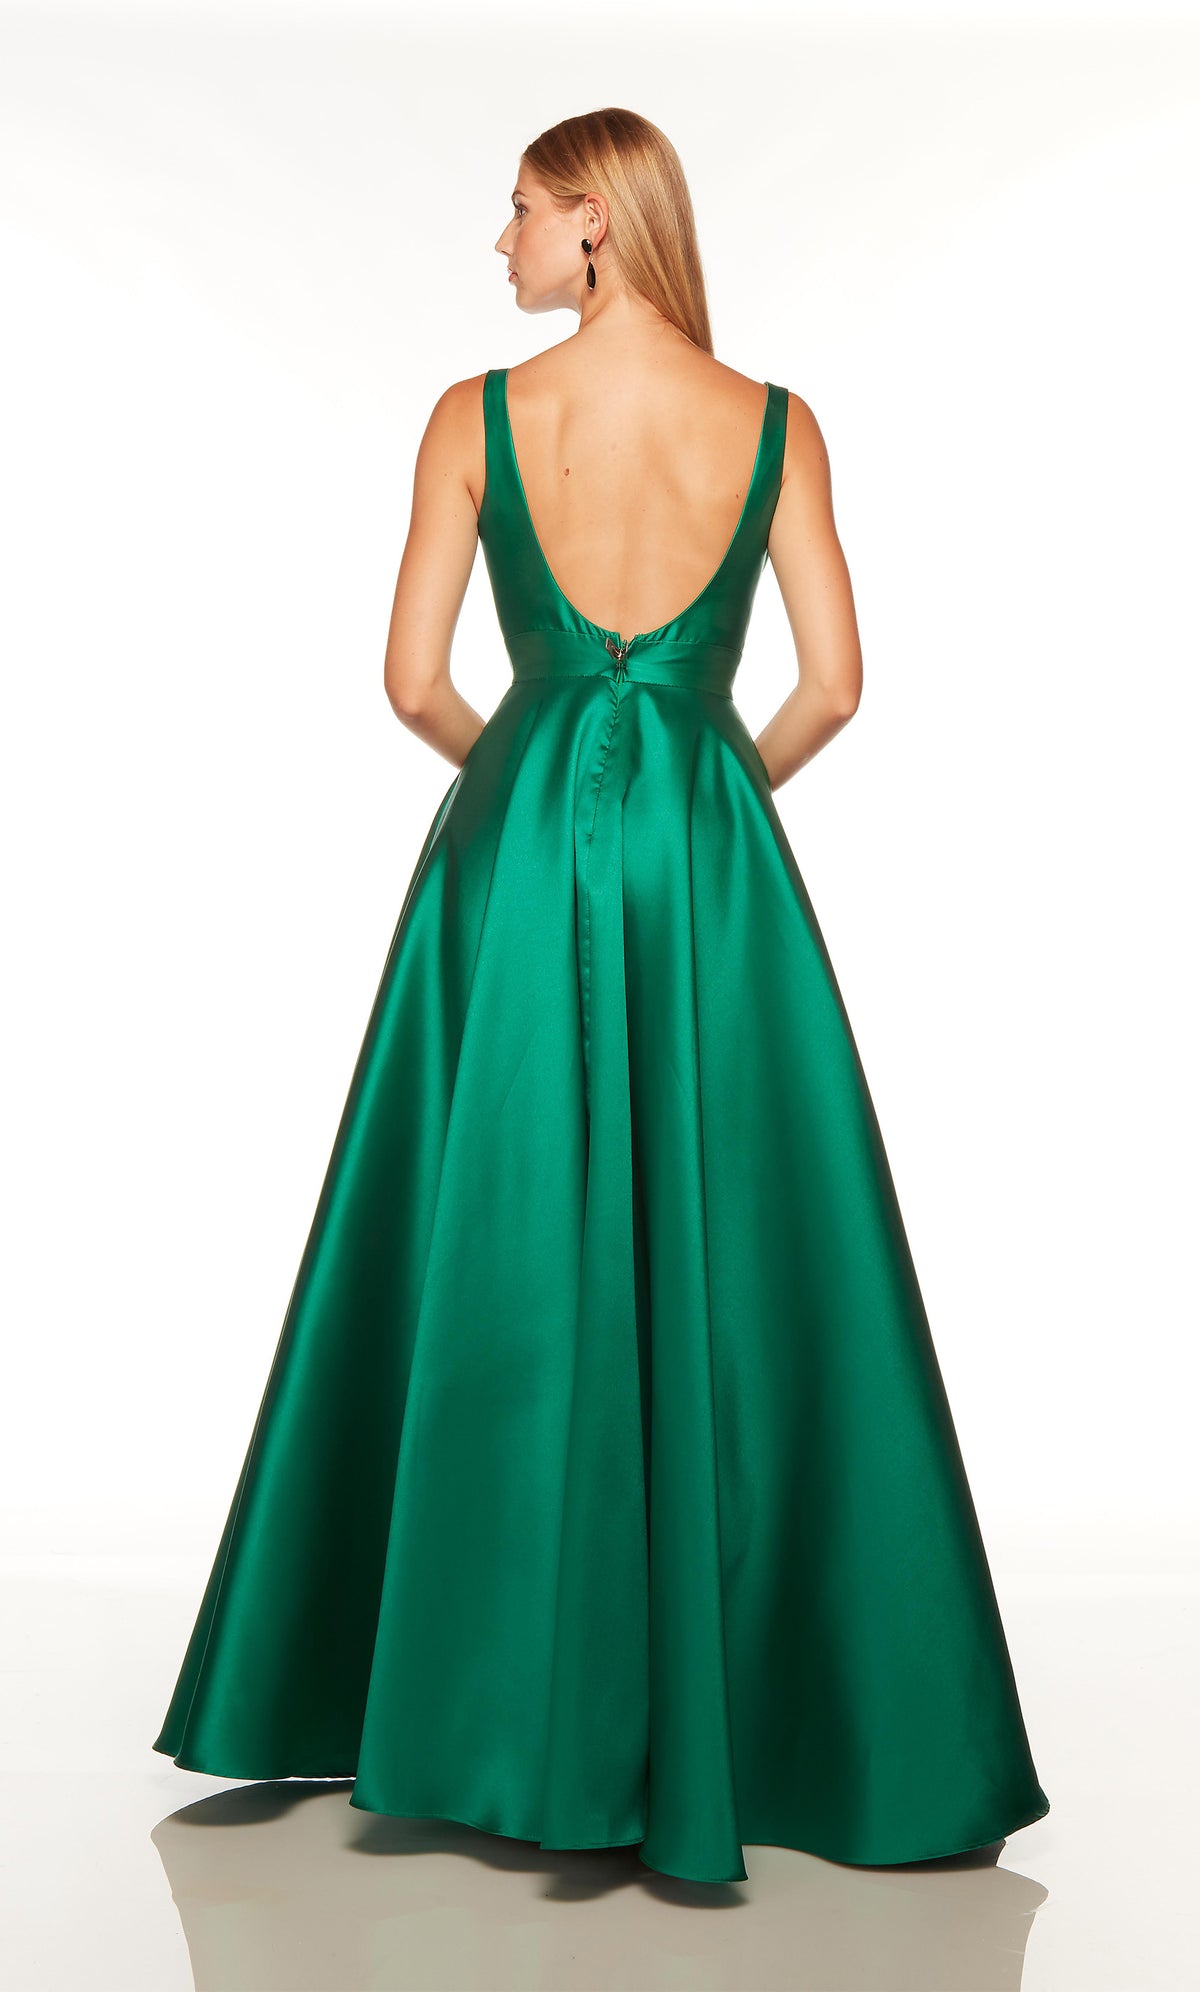 Floor length, open back, green evening gown.